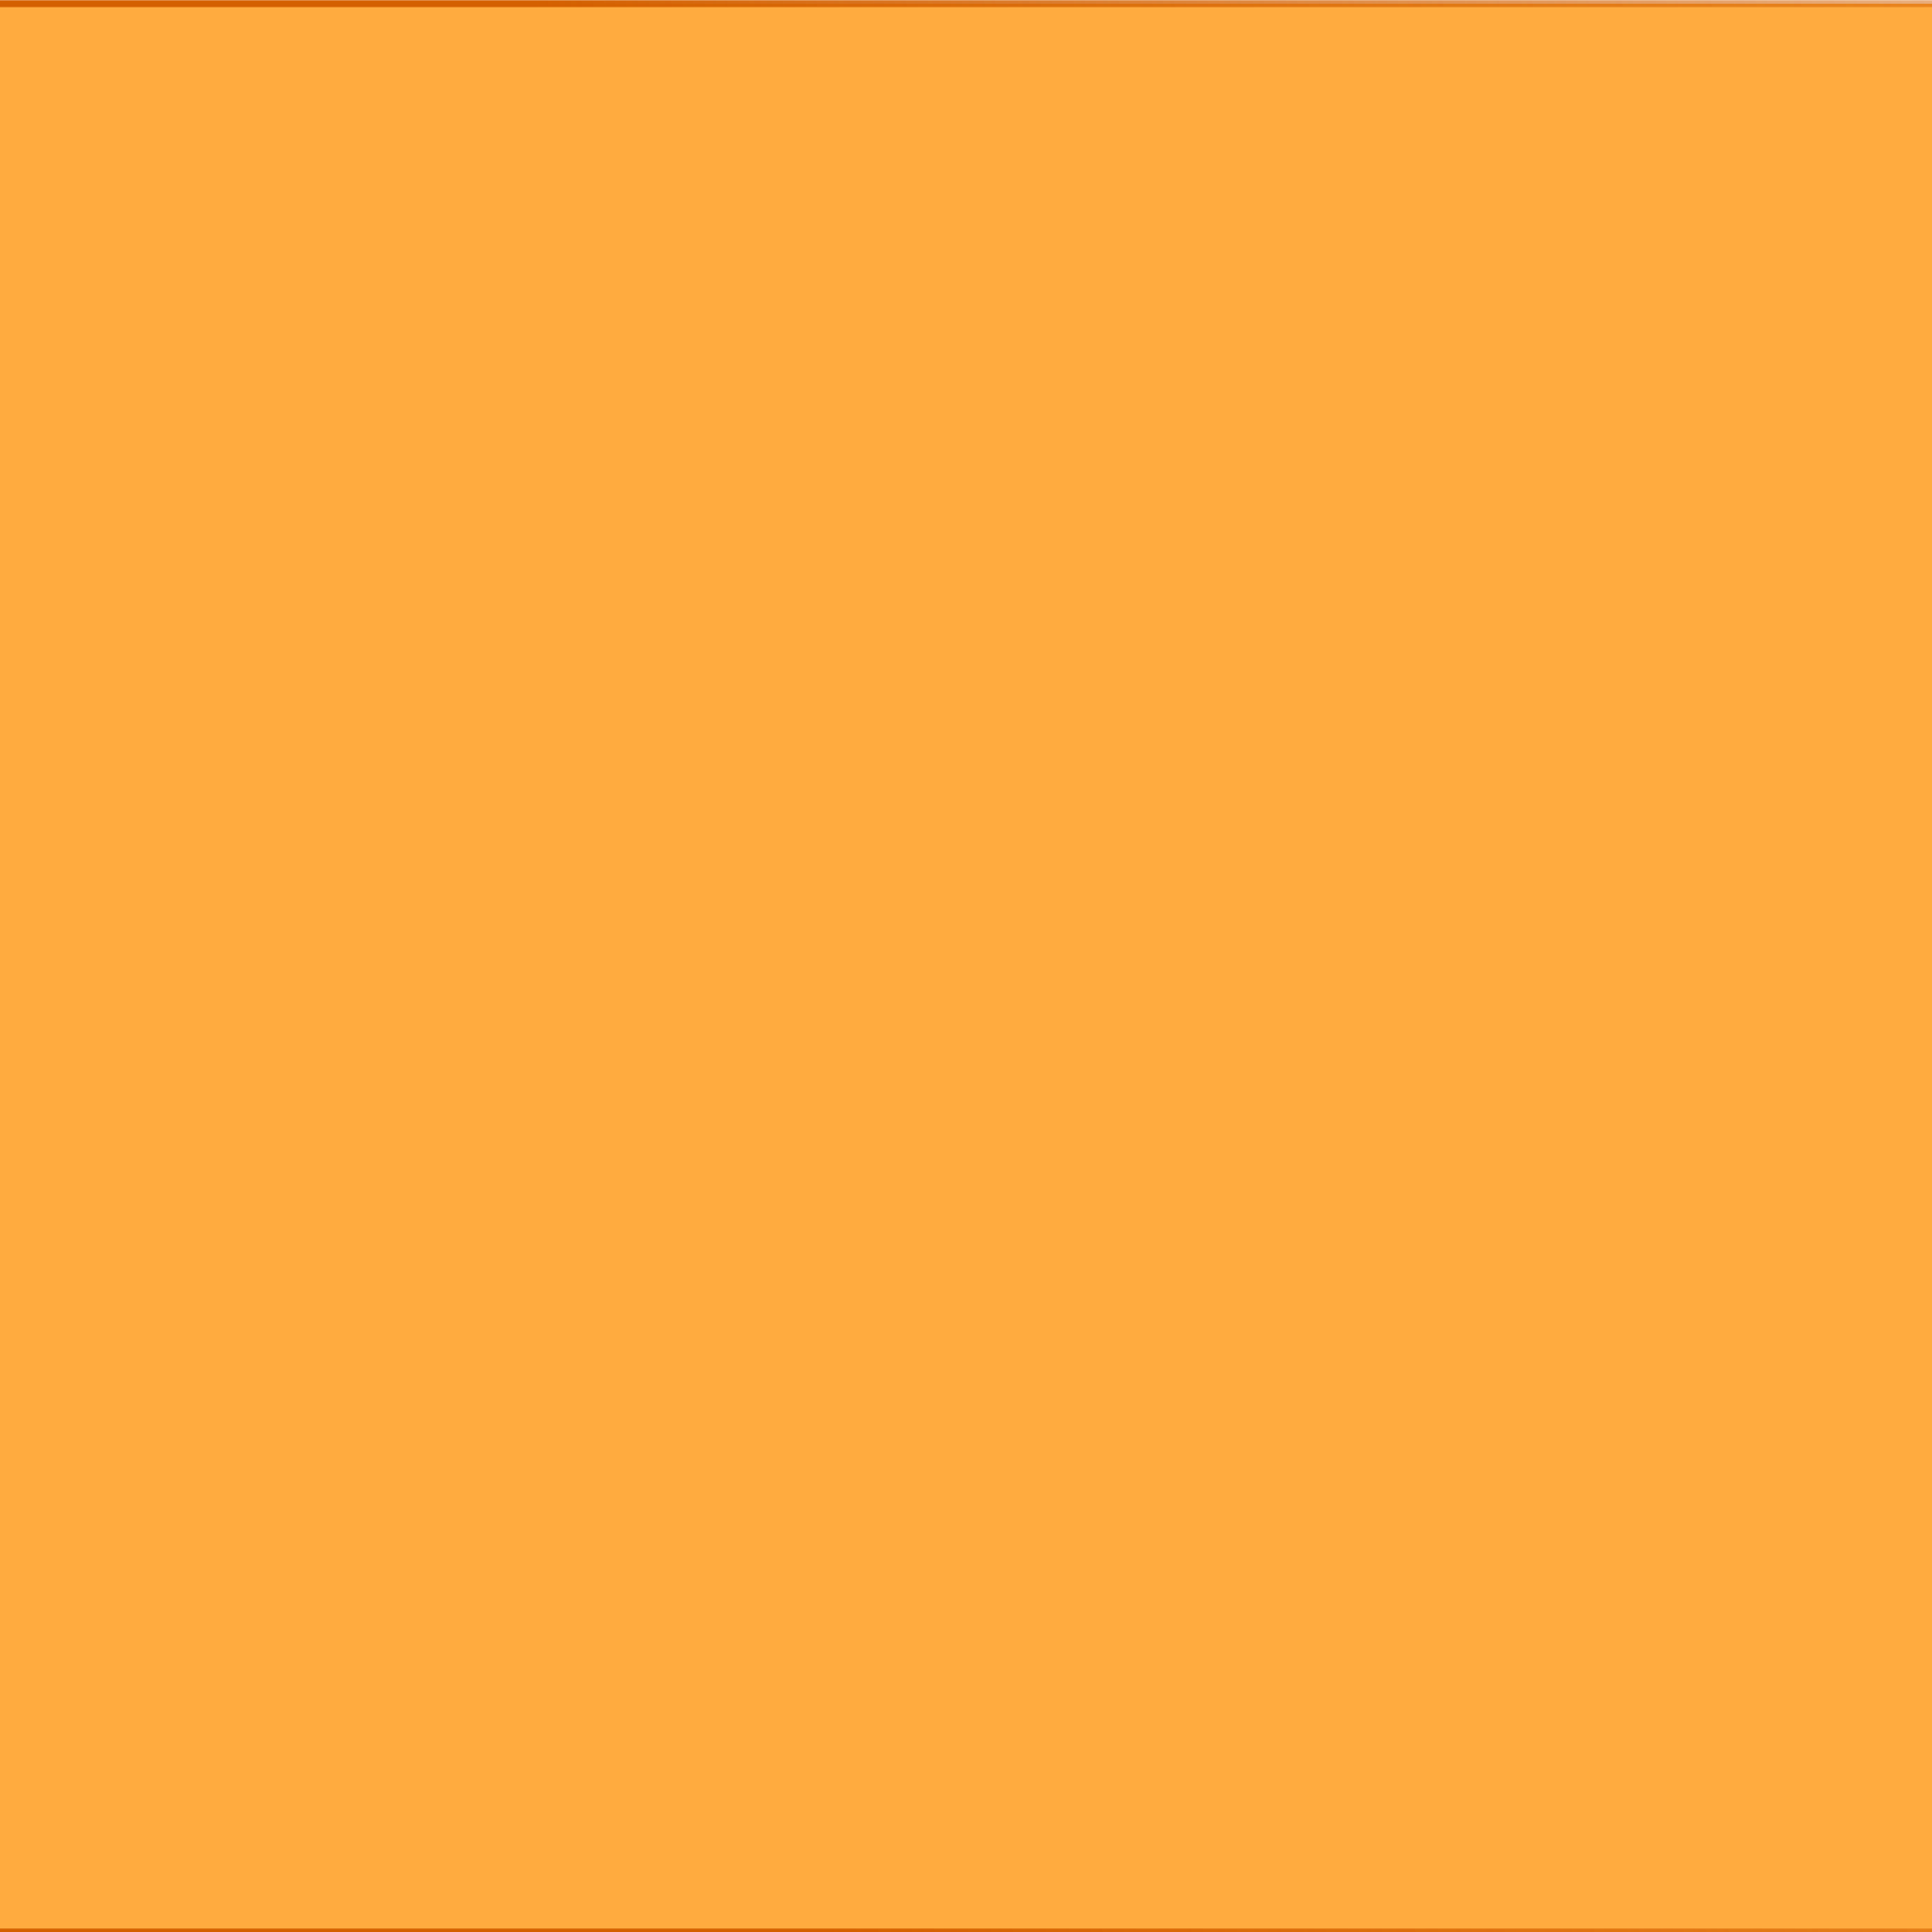 7 63 67. Керама Марацци Калейдоскоп оранжевый. Watmb065 оранжевая 20х40. Плитка напольная оранжевая. Керамическая плитка оранжевого цвета.